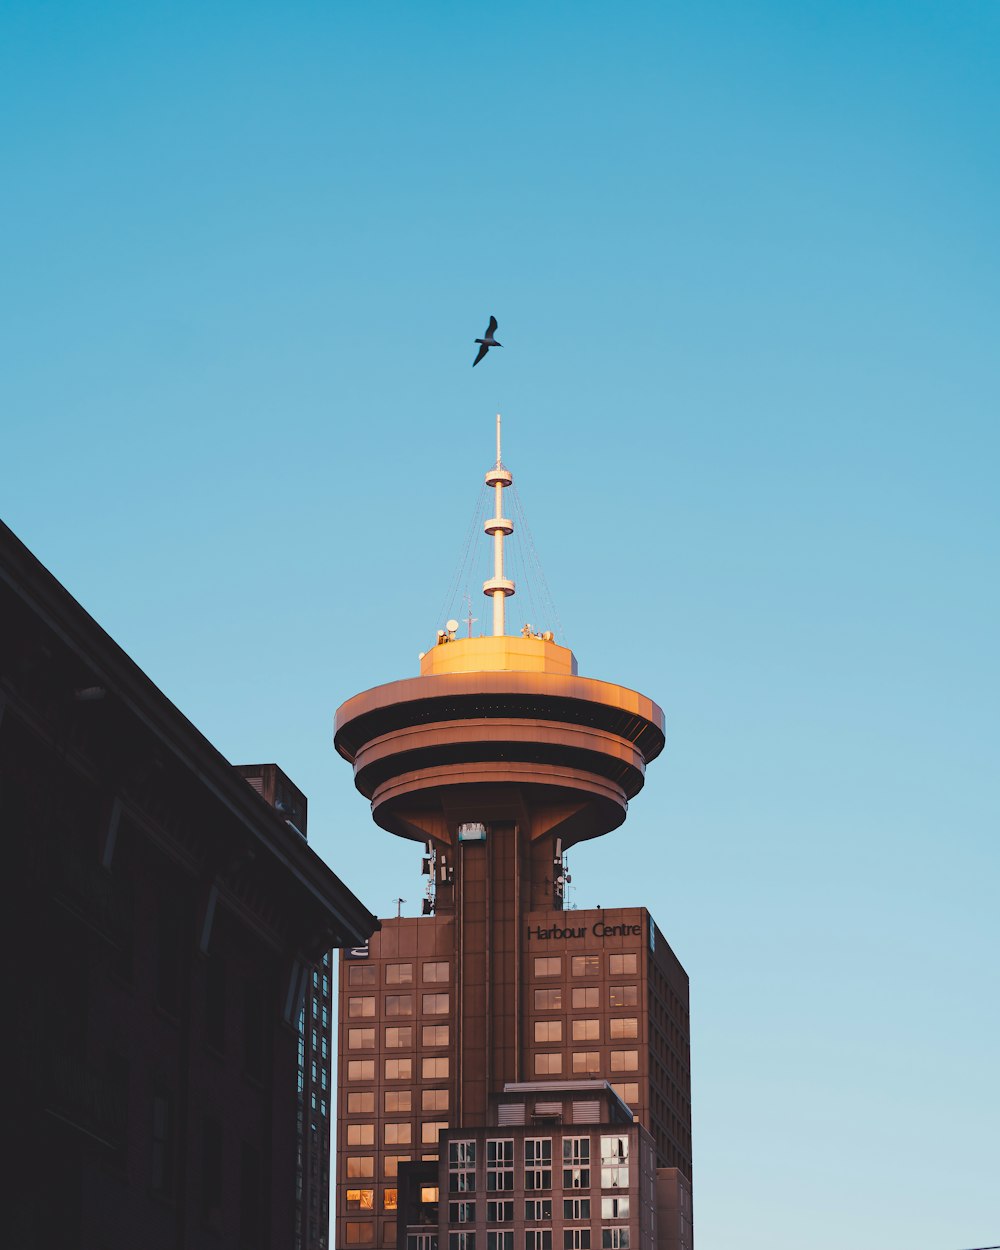 a bird flying over a tall building